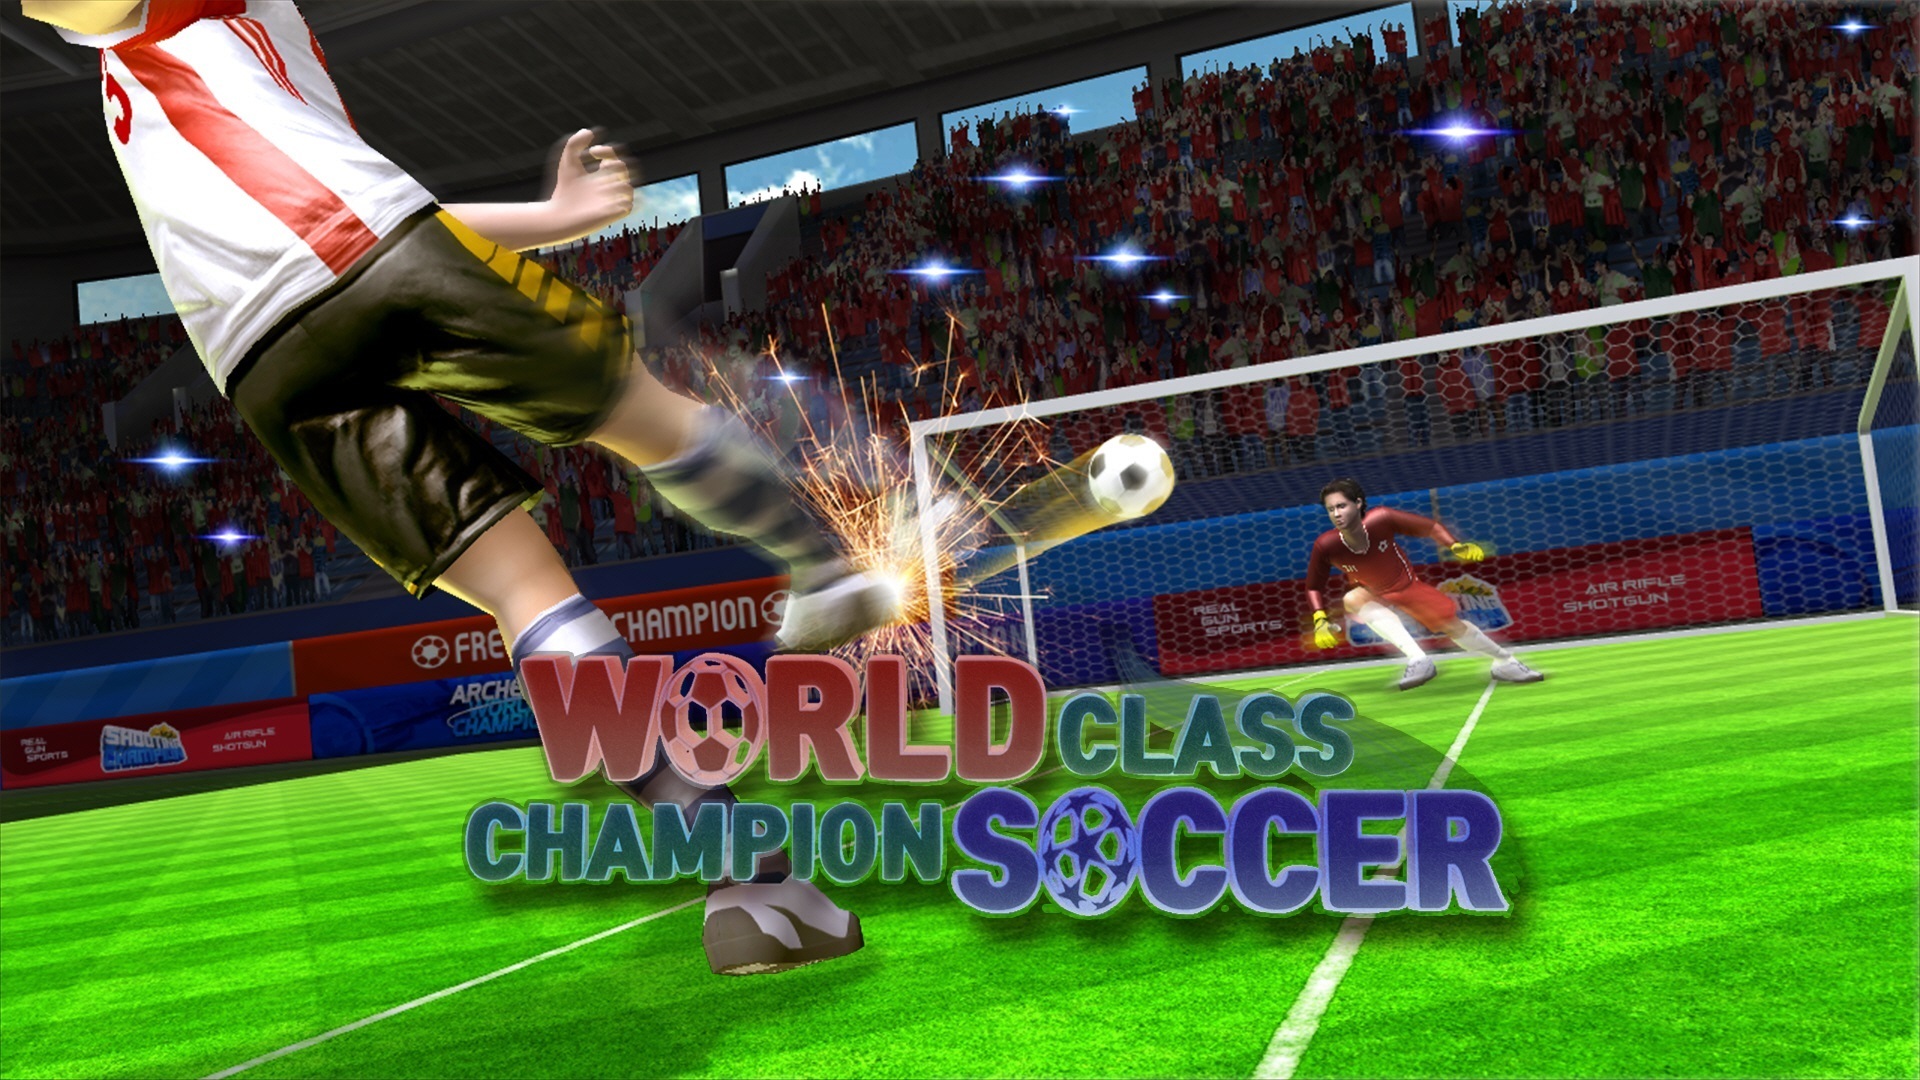 World Class Champion Soccer